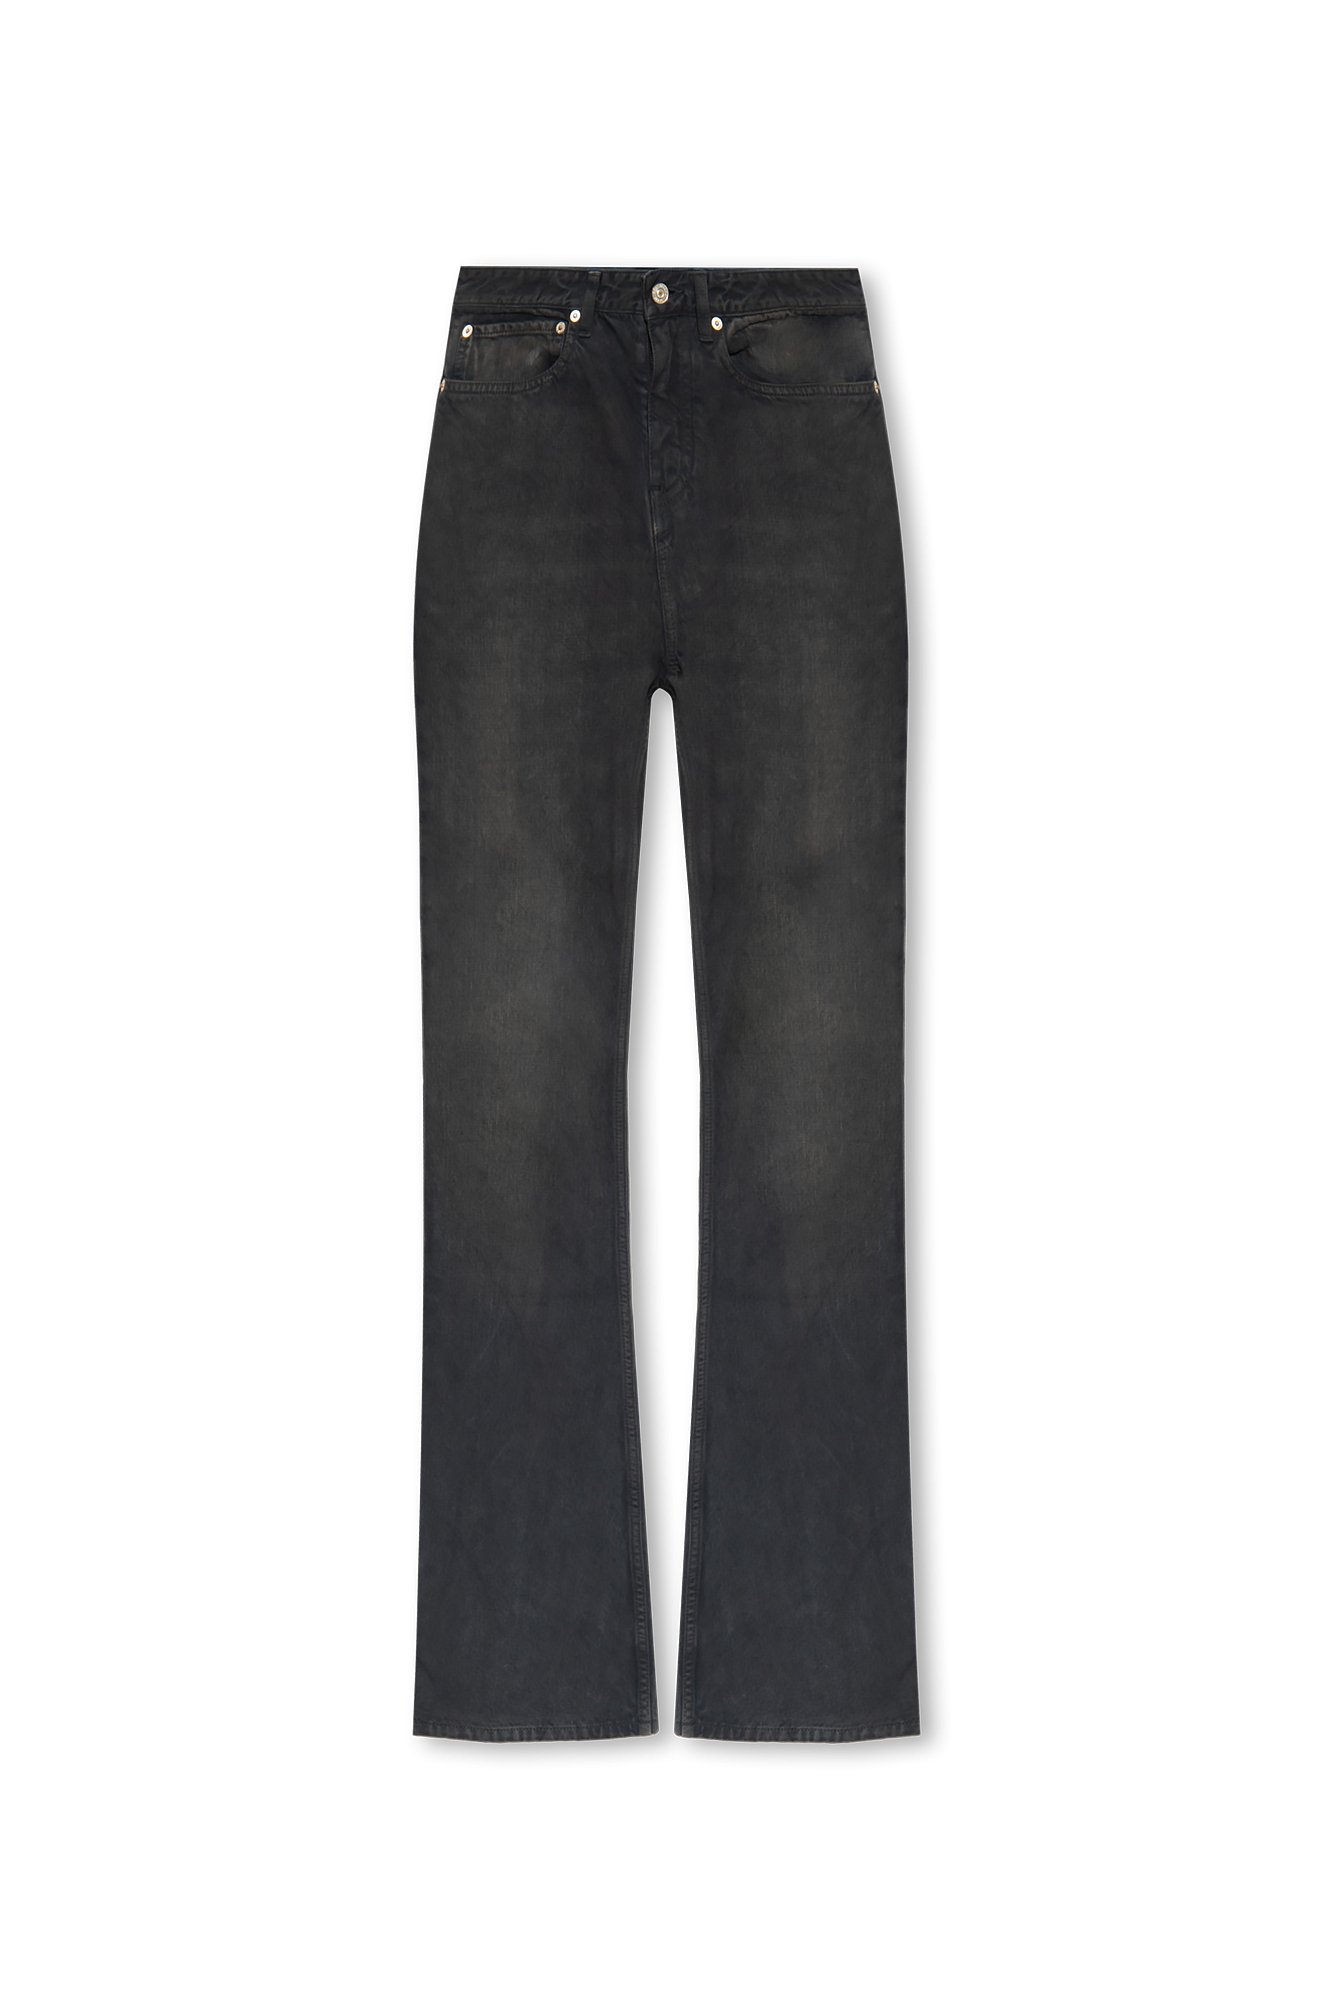 Black Bootcut jeans, Balenciaga